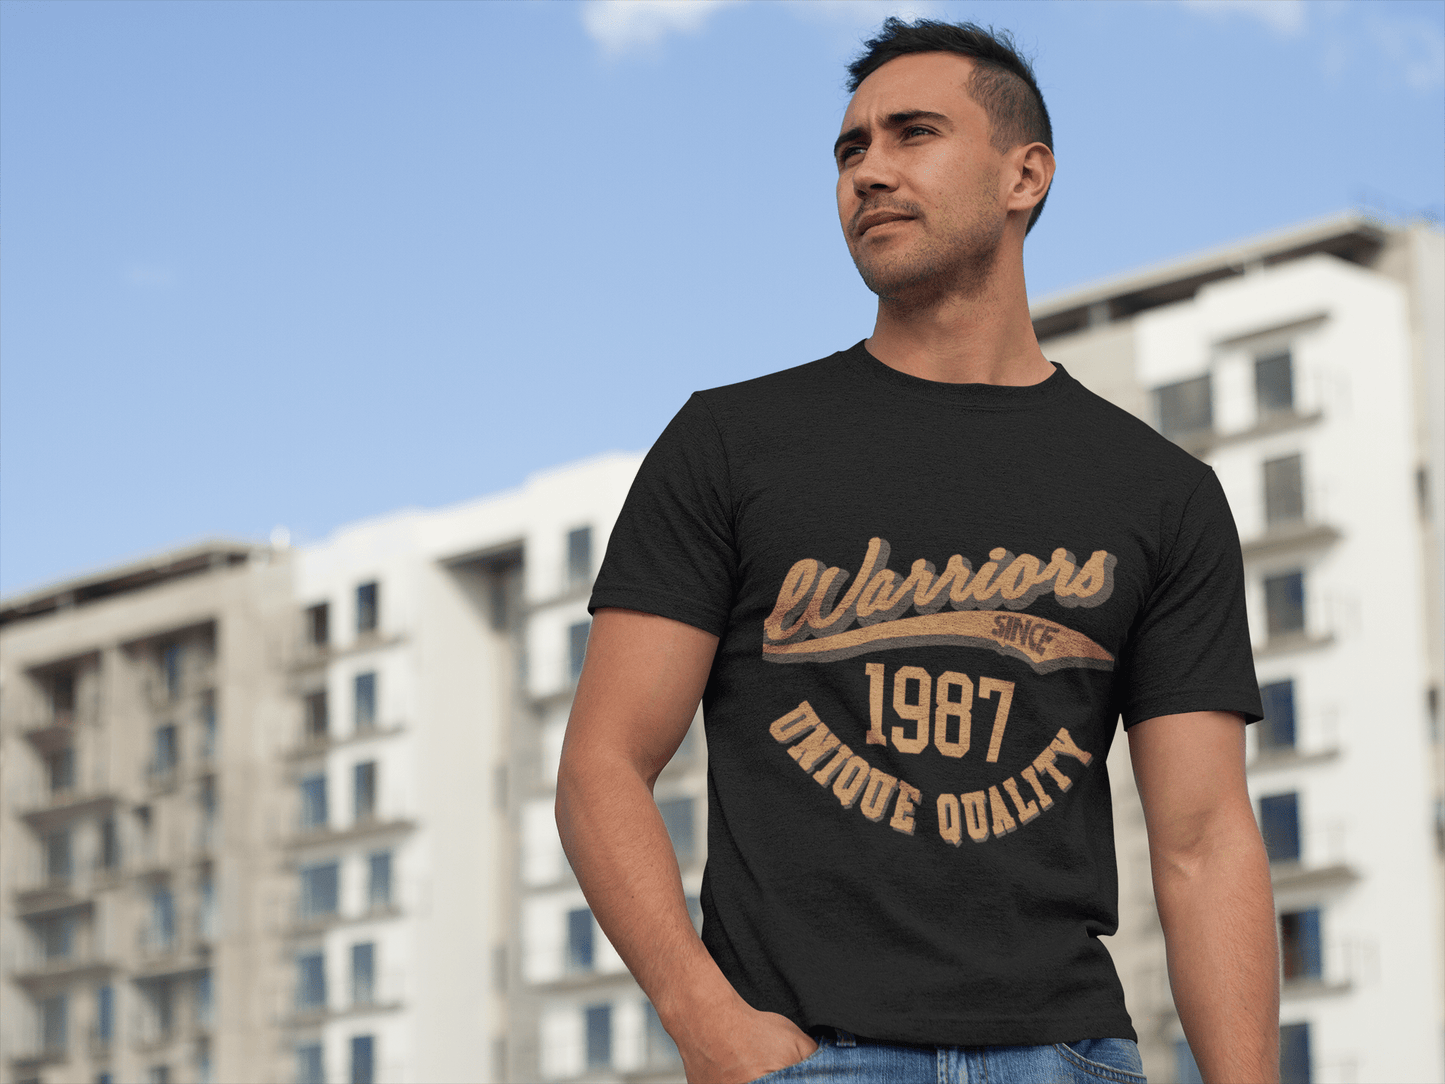 Men's Vintage Tee Shirt Graphic T shirt Warriors Since 1987 Navy Round Neck